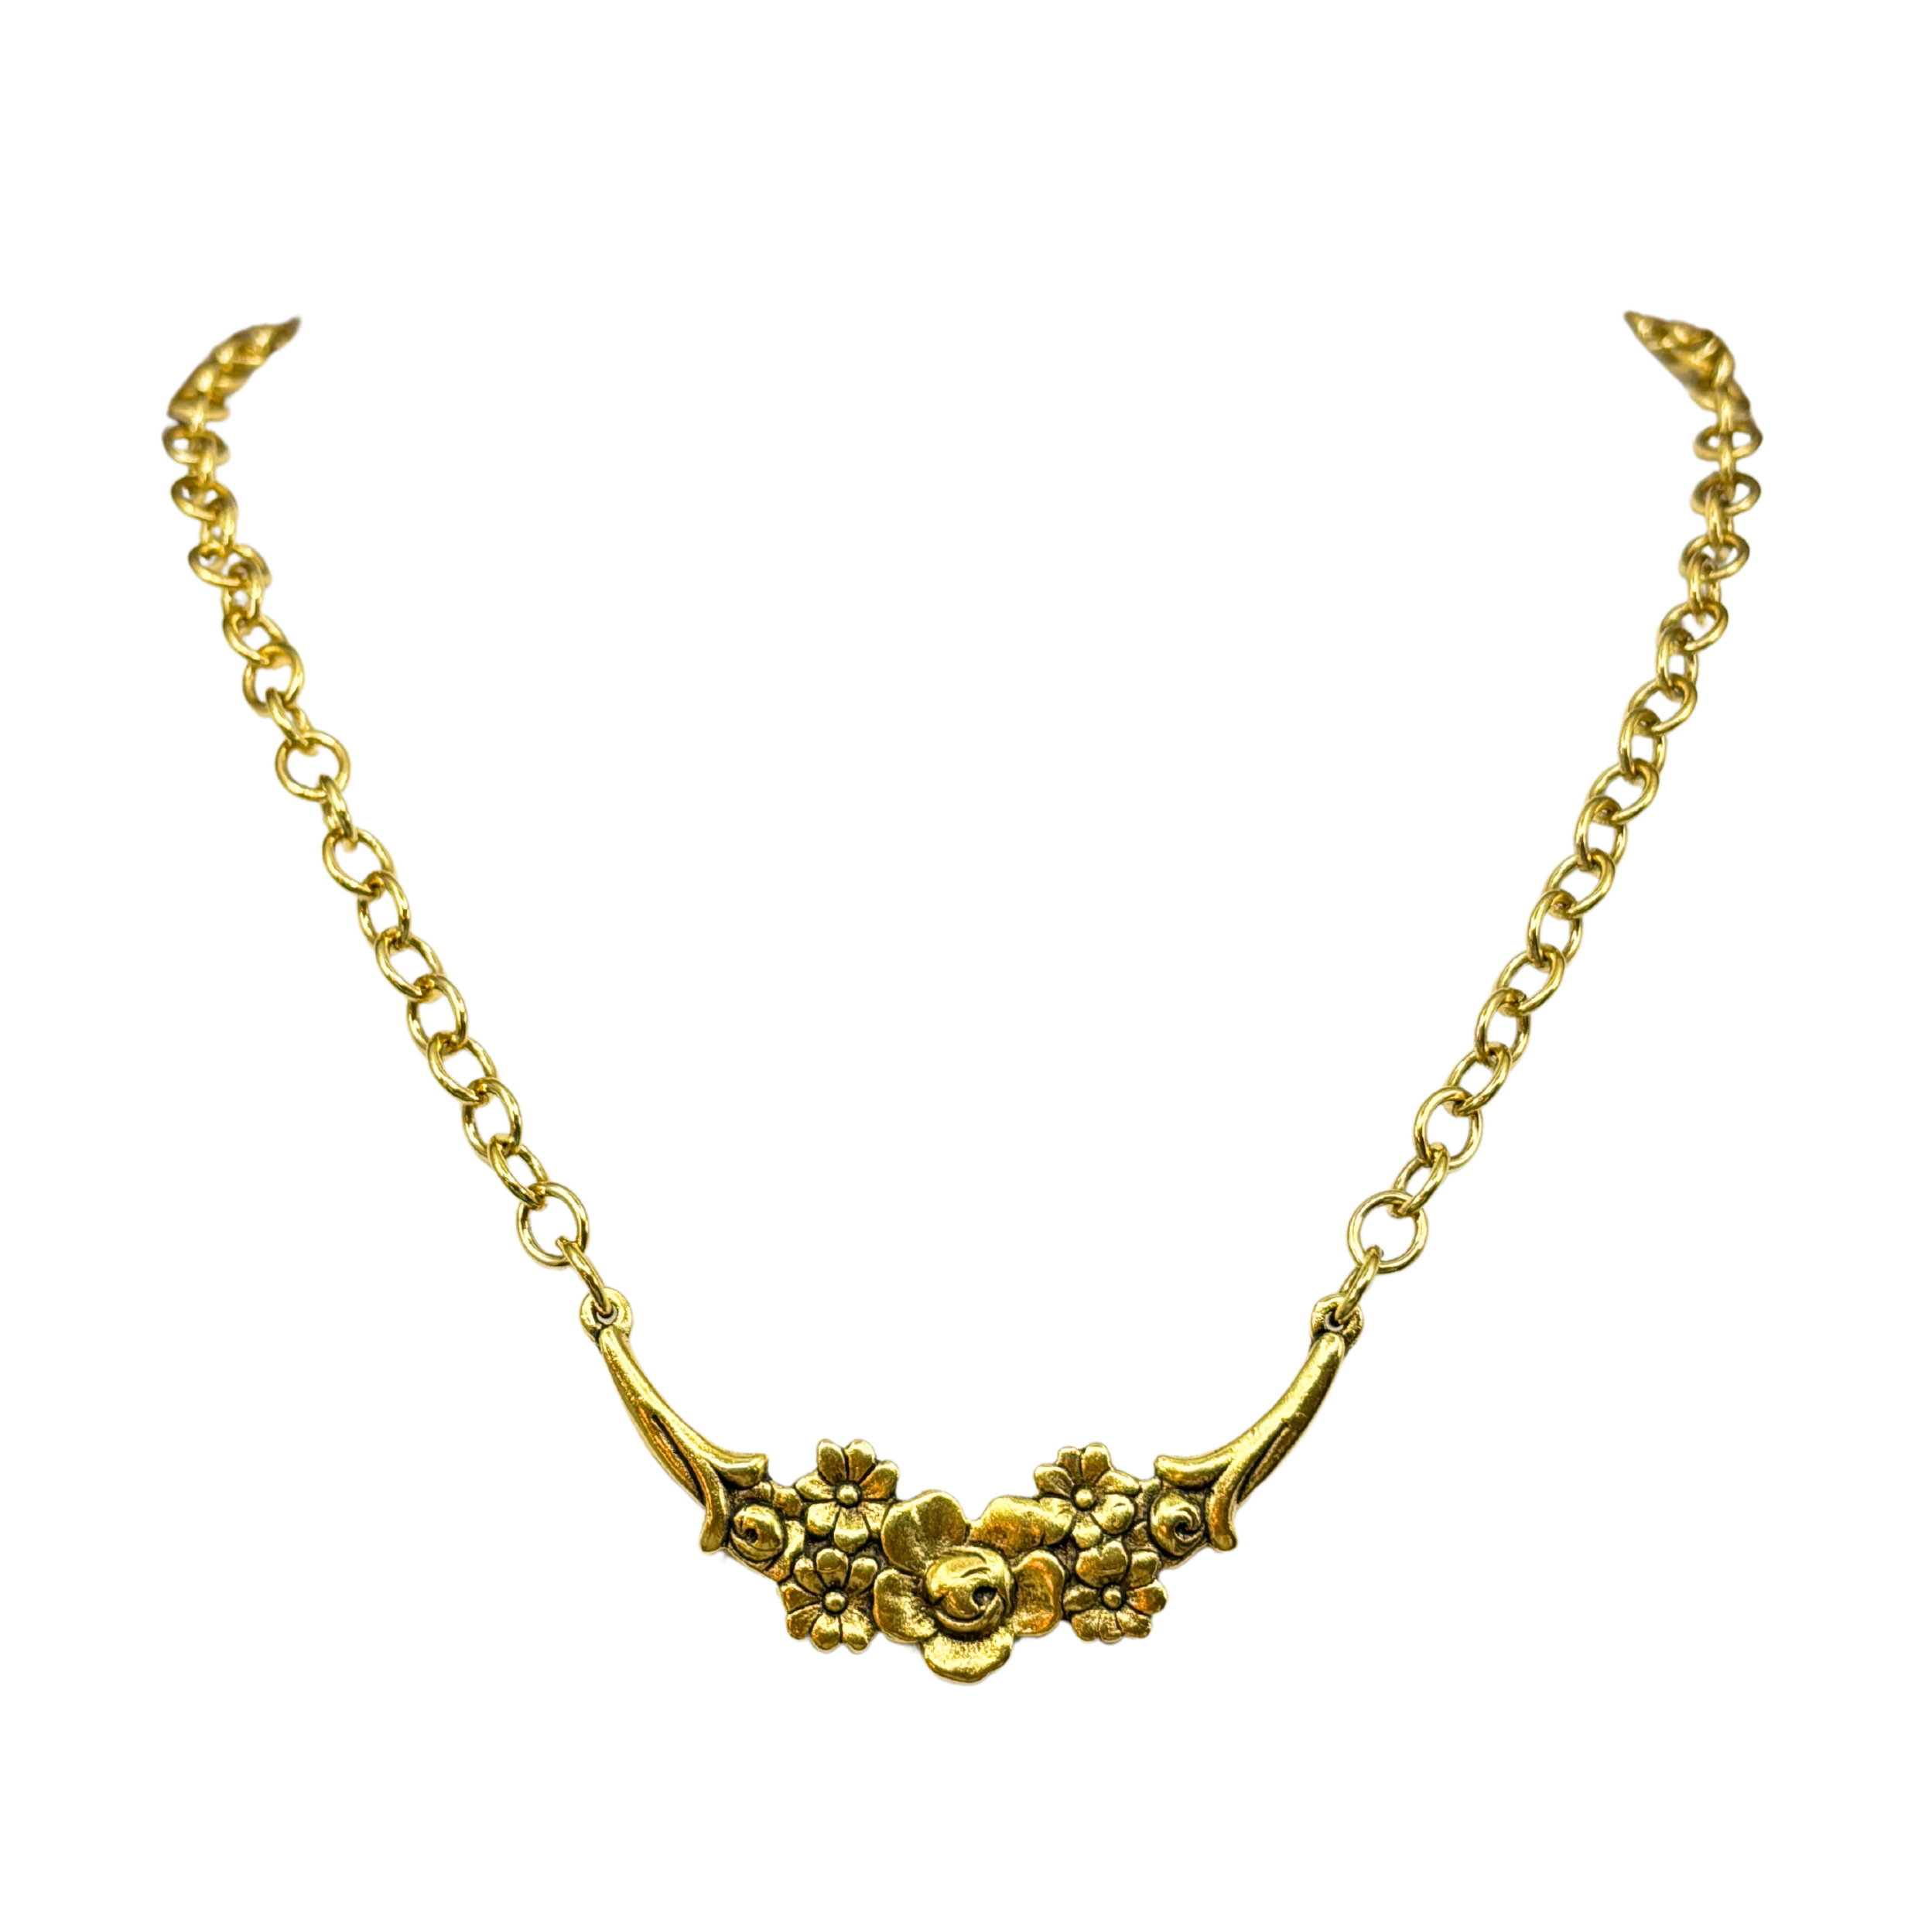 Vintage Reproduction Gold Floral Crescent Necklace